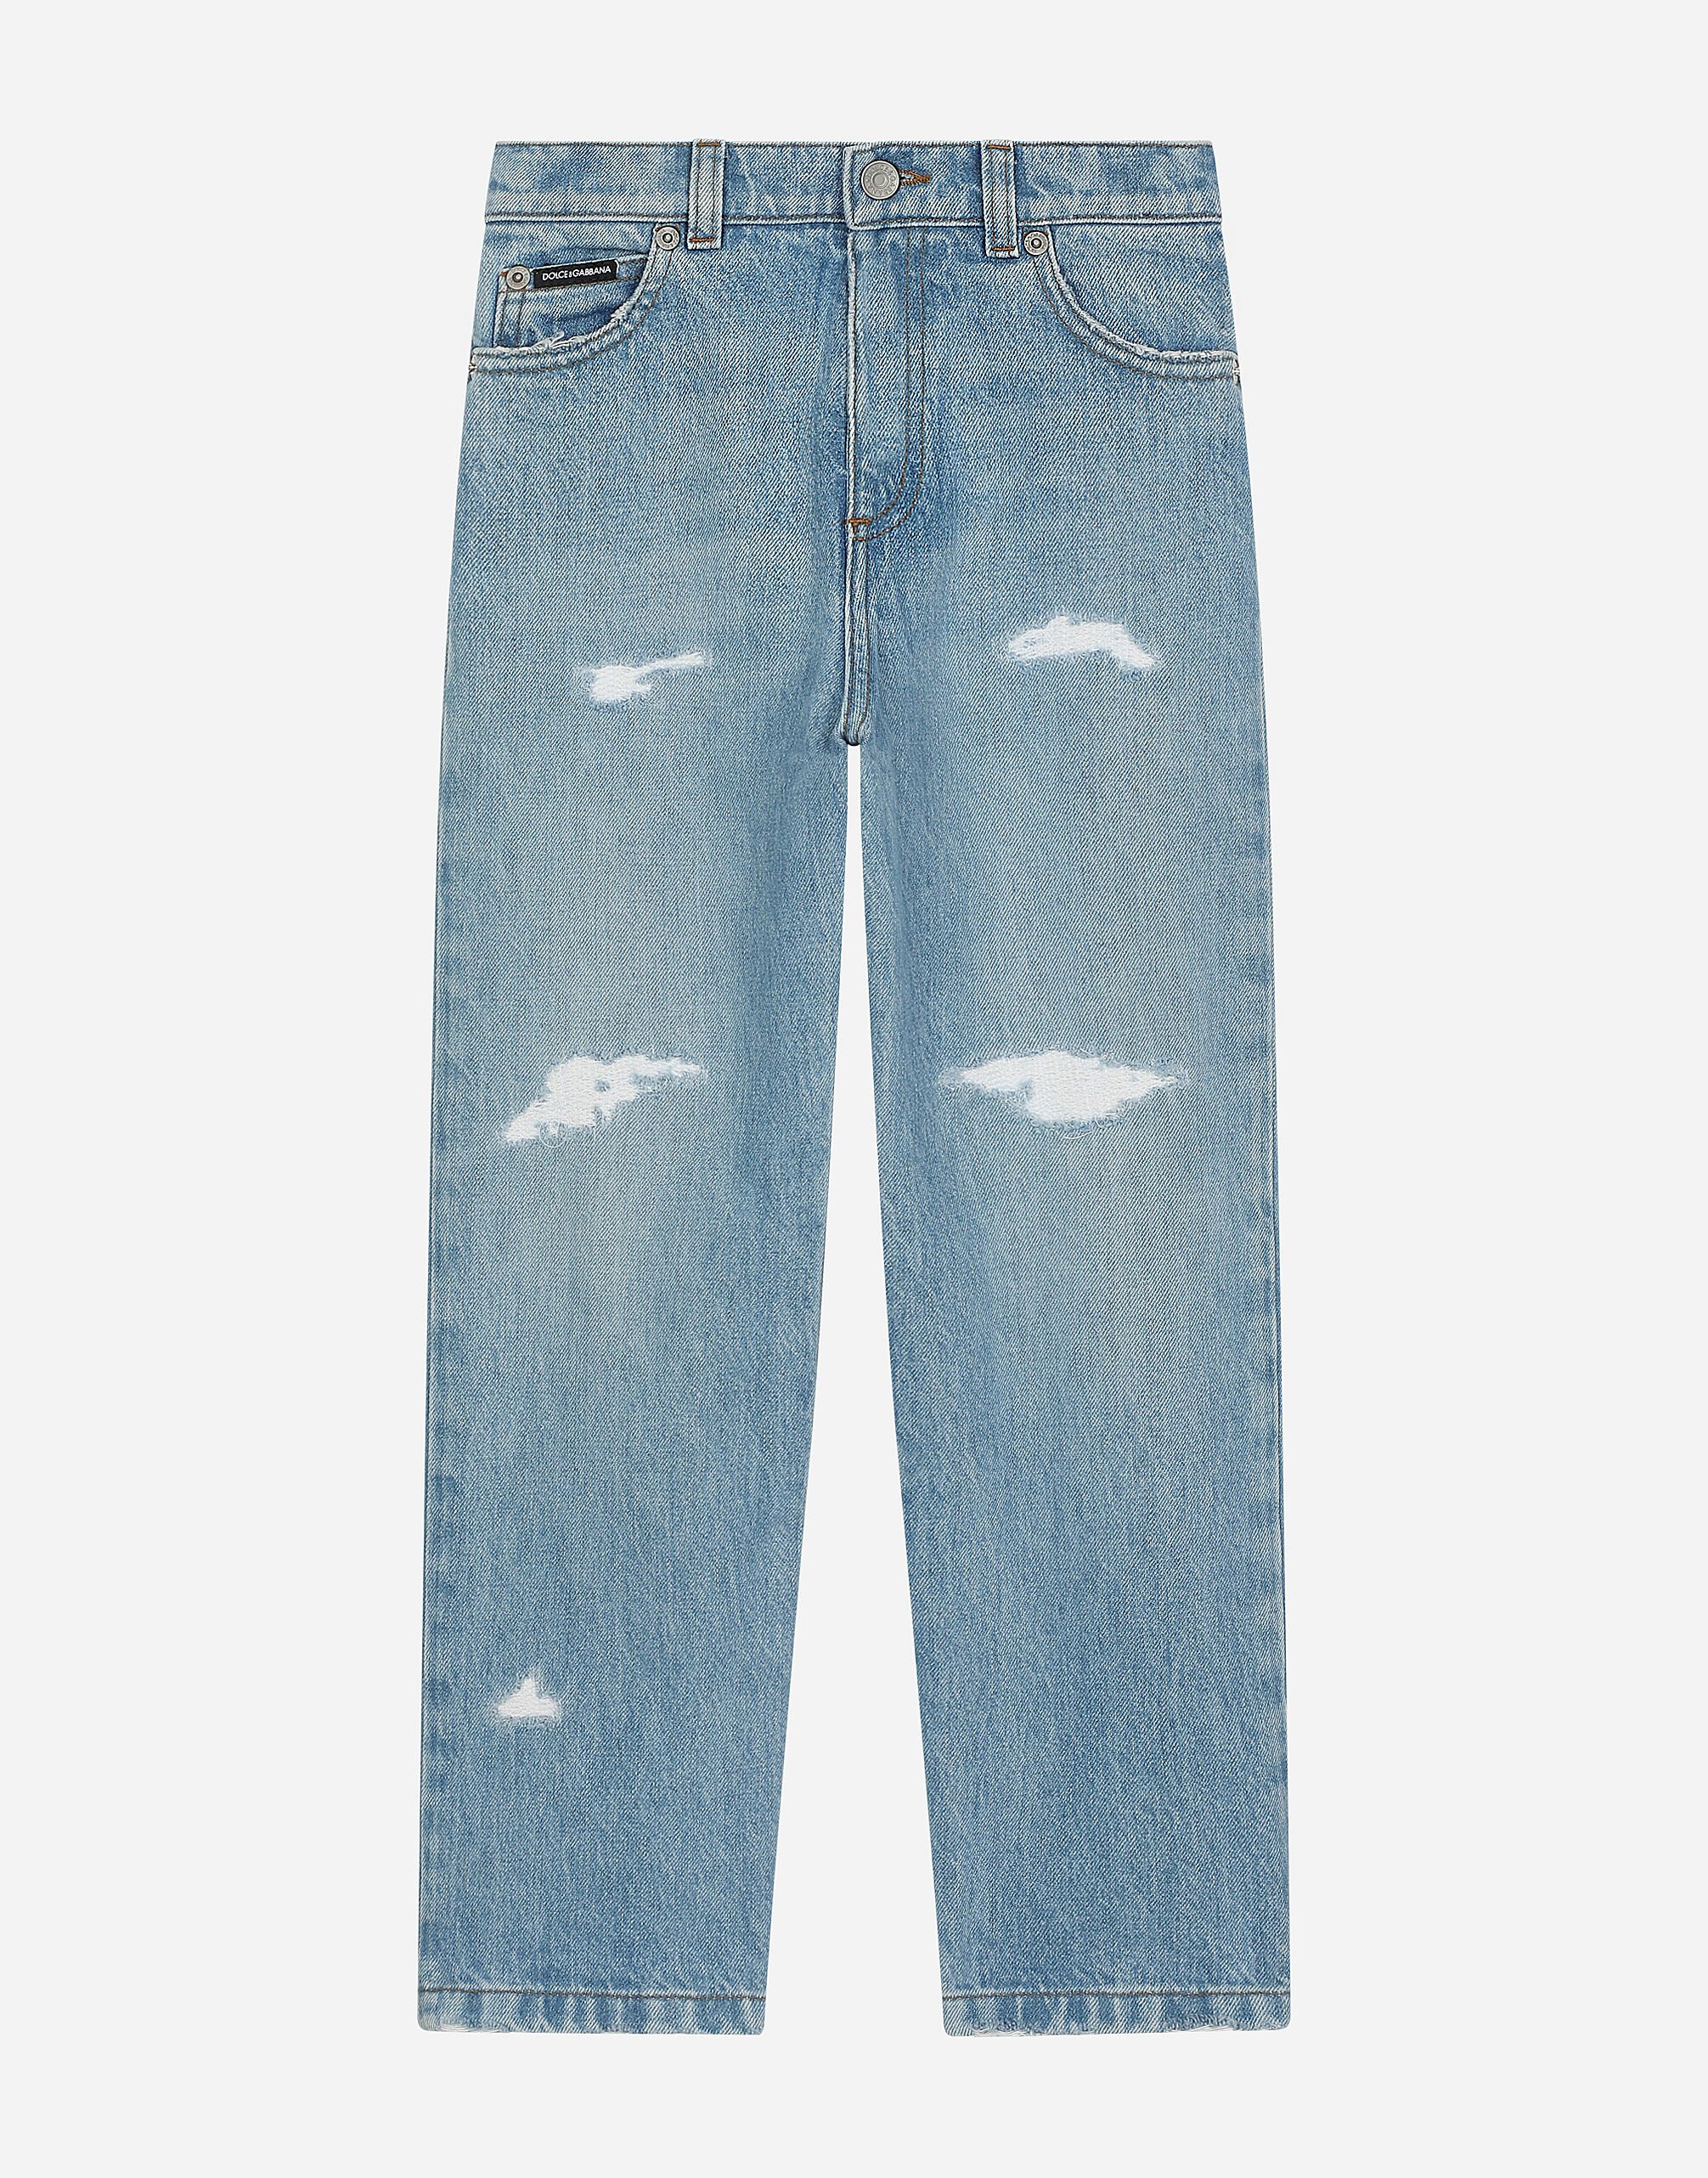 Dolce & Gabbana 5-pocket denim jeans with logo tag Print L43S81FS8C5